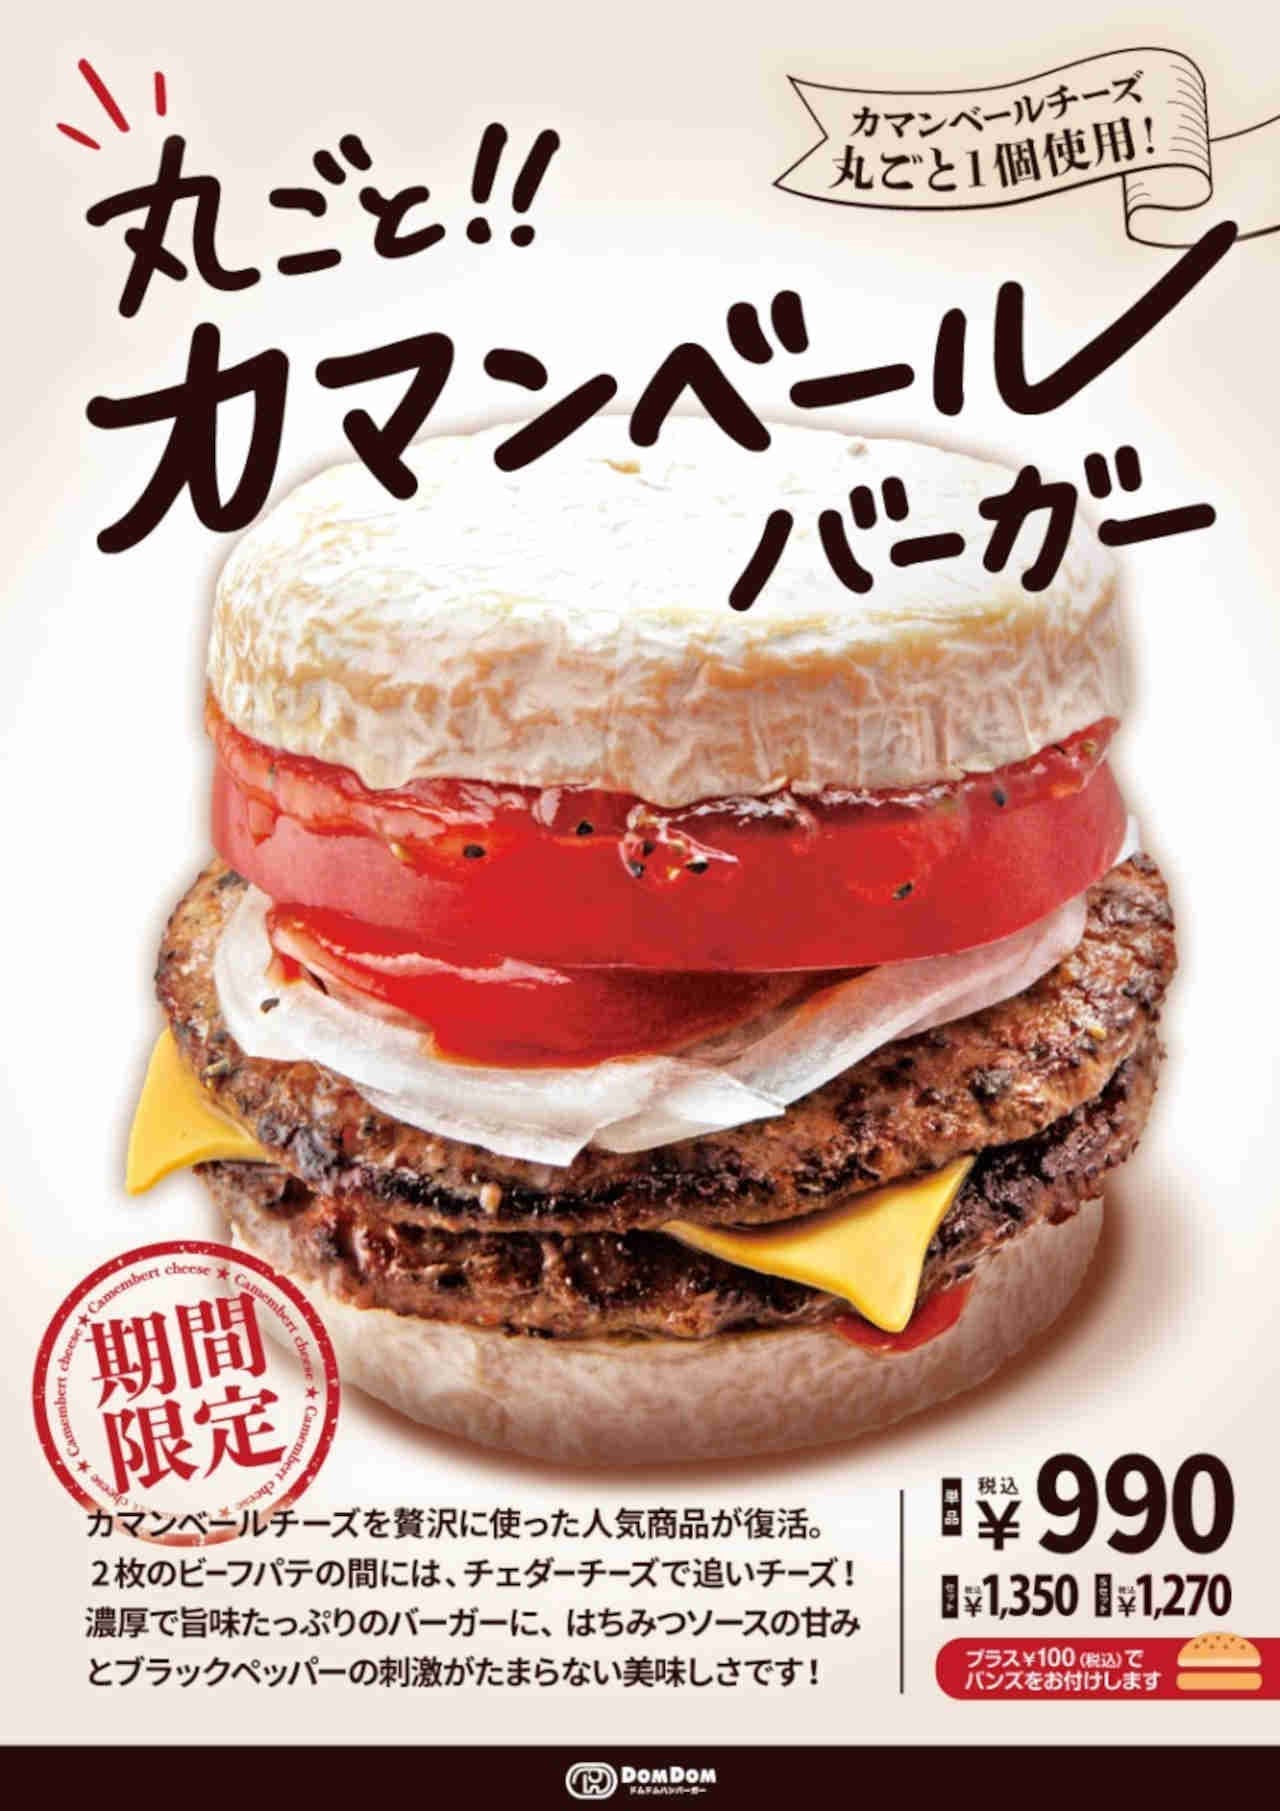 Dom Dom hamburger "whole !! Camembert burger"